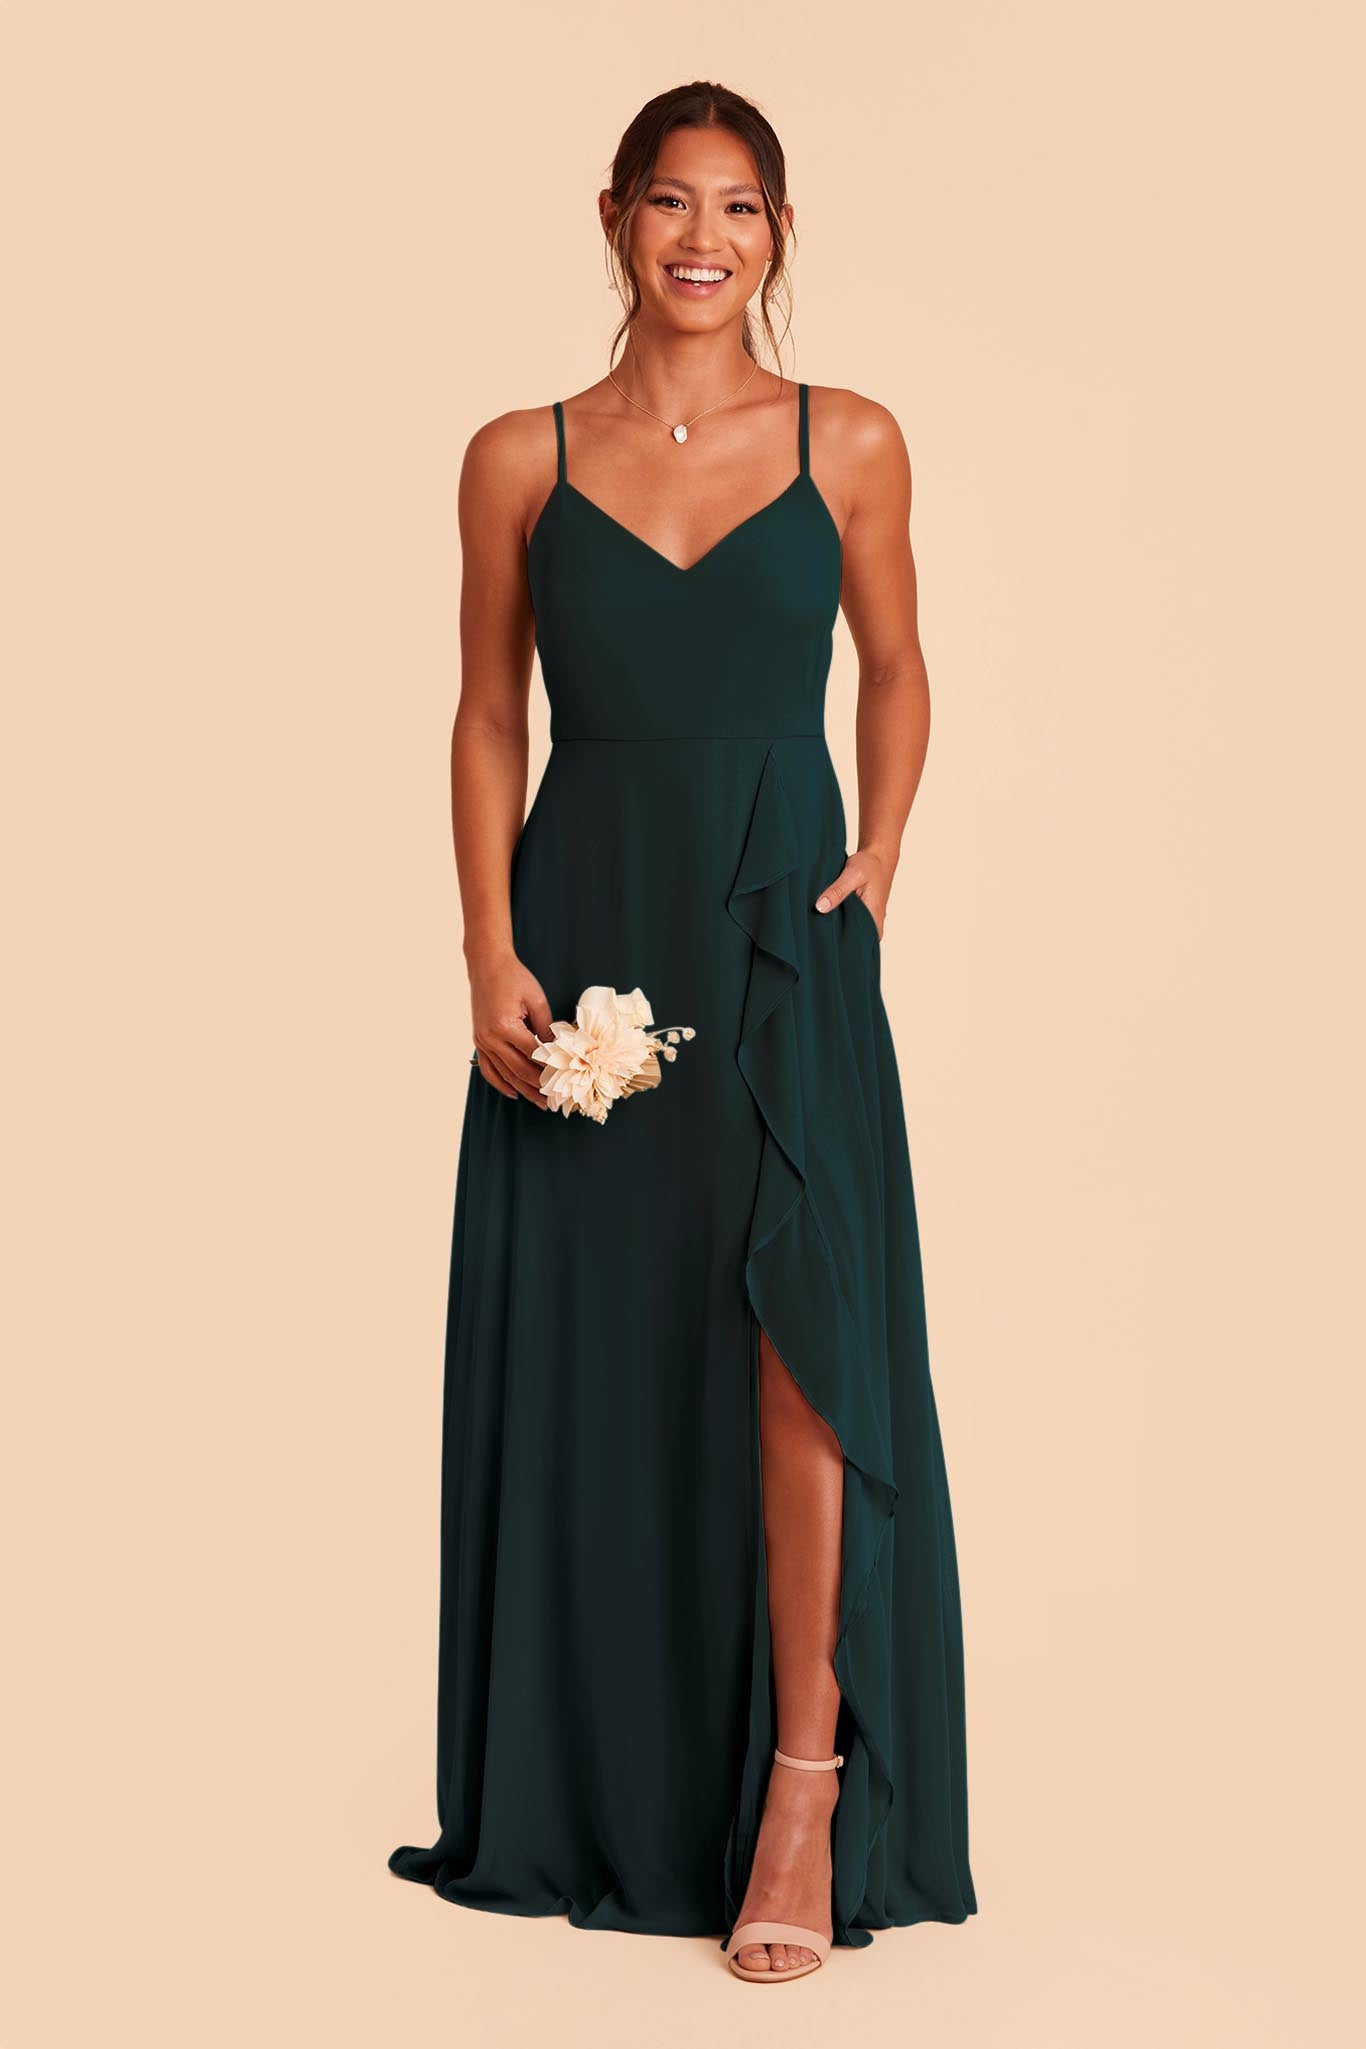 Emerald Theresa Chiffon Dress by Birdy Grey